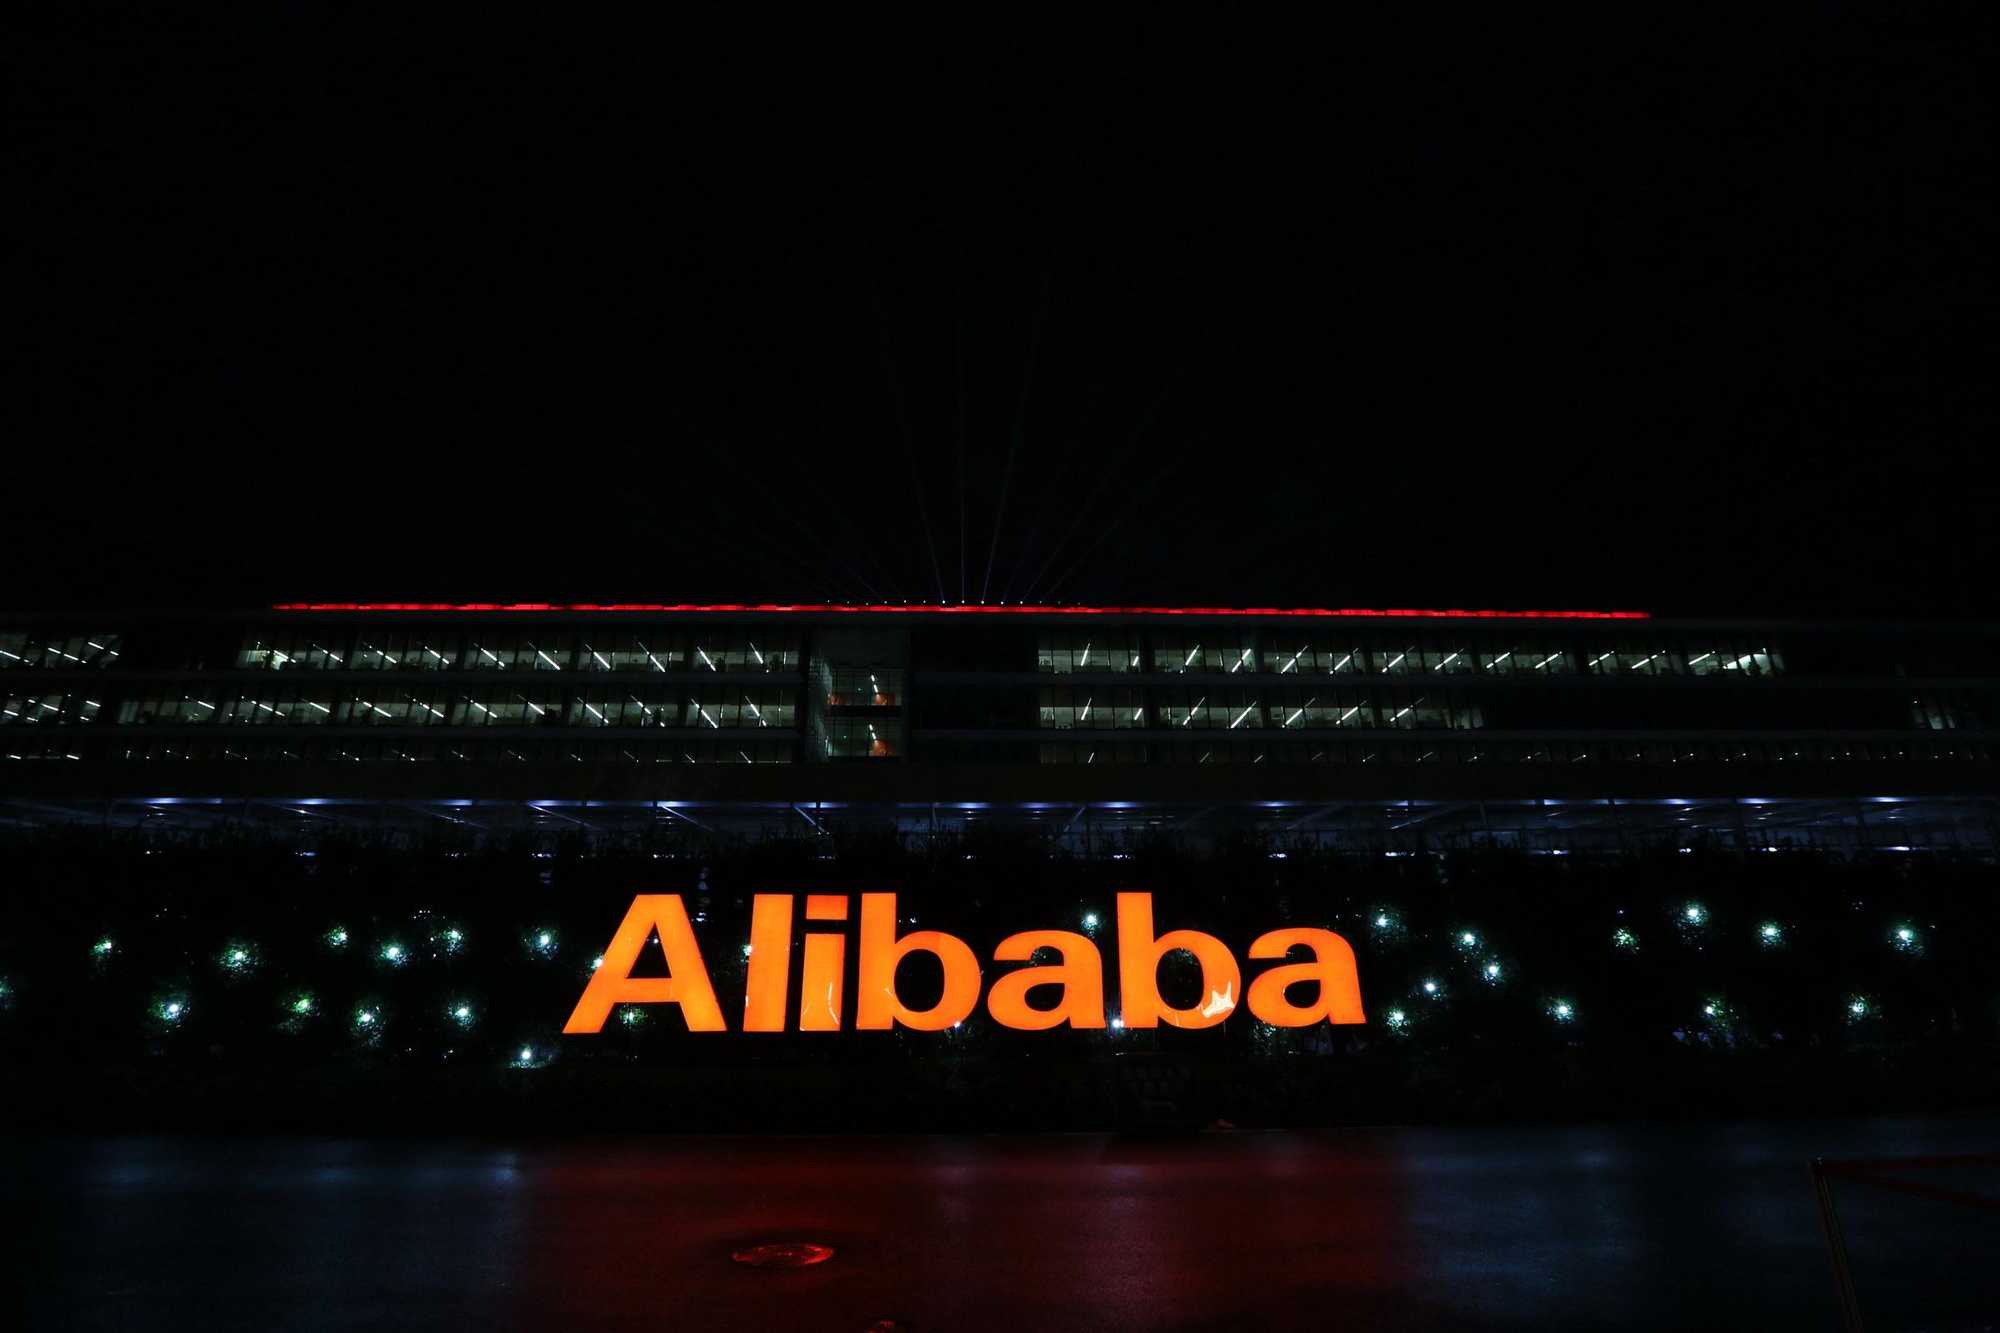 Alibaba investiert 15 Milliarden Dollar in Forschung